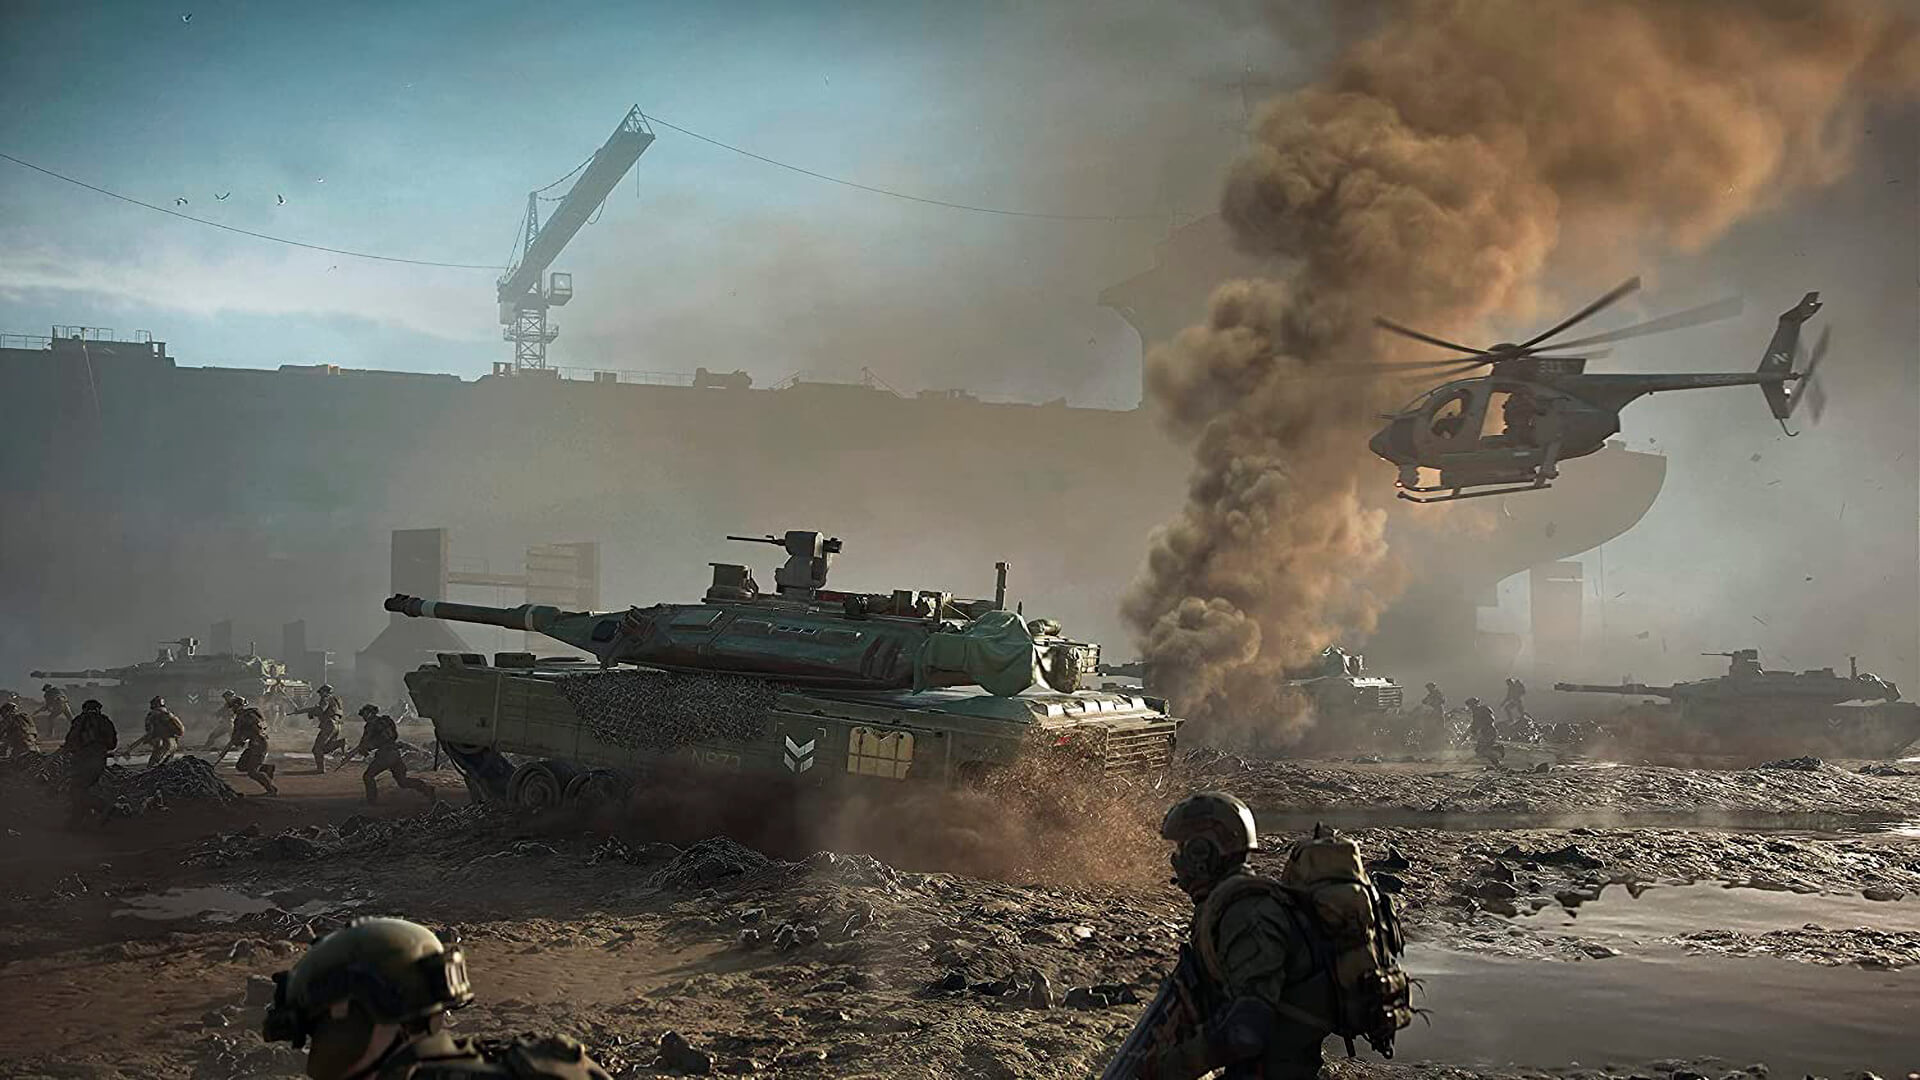 Jogo Battlefield 2042 - PS5 - Faz a Boa!